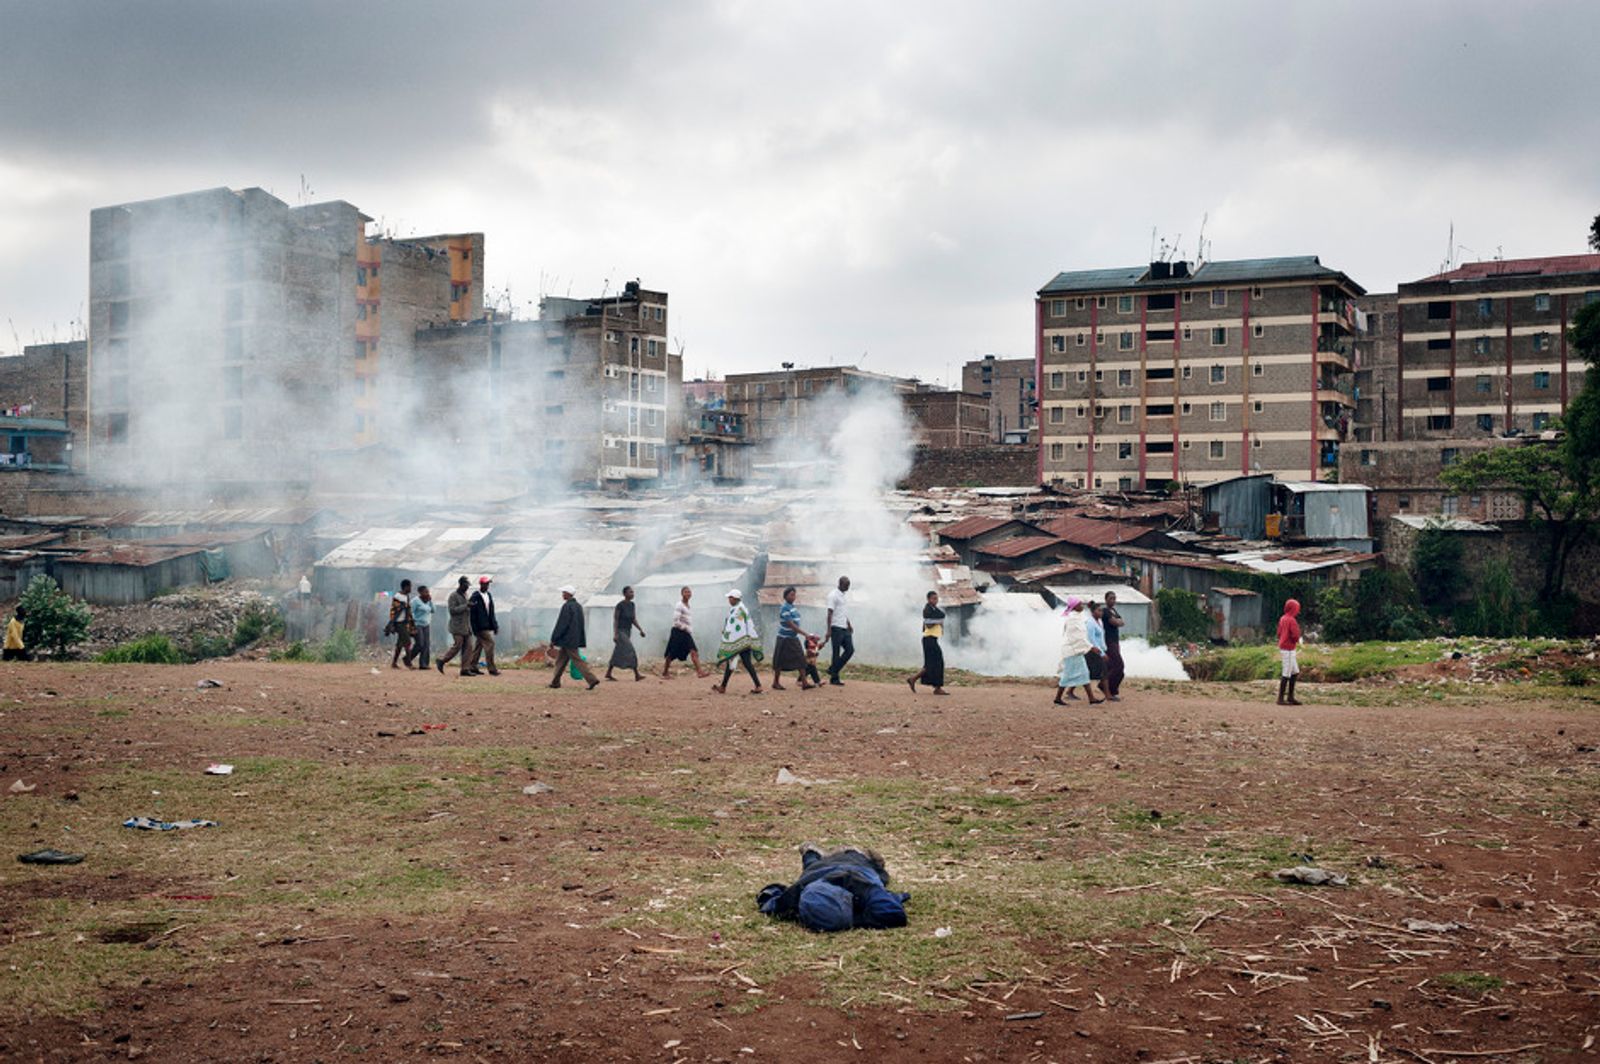 © Alessandro Grassani - Image from the Environmental migrants: the last illusion. Kenya, Nairobi photography project